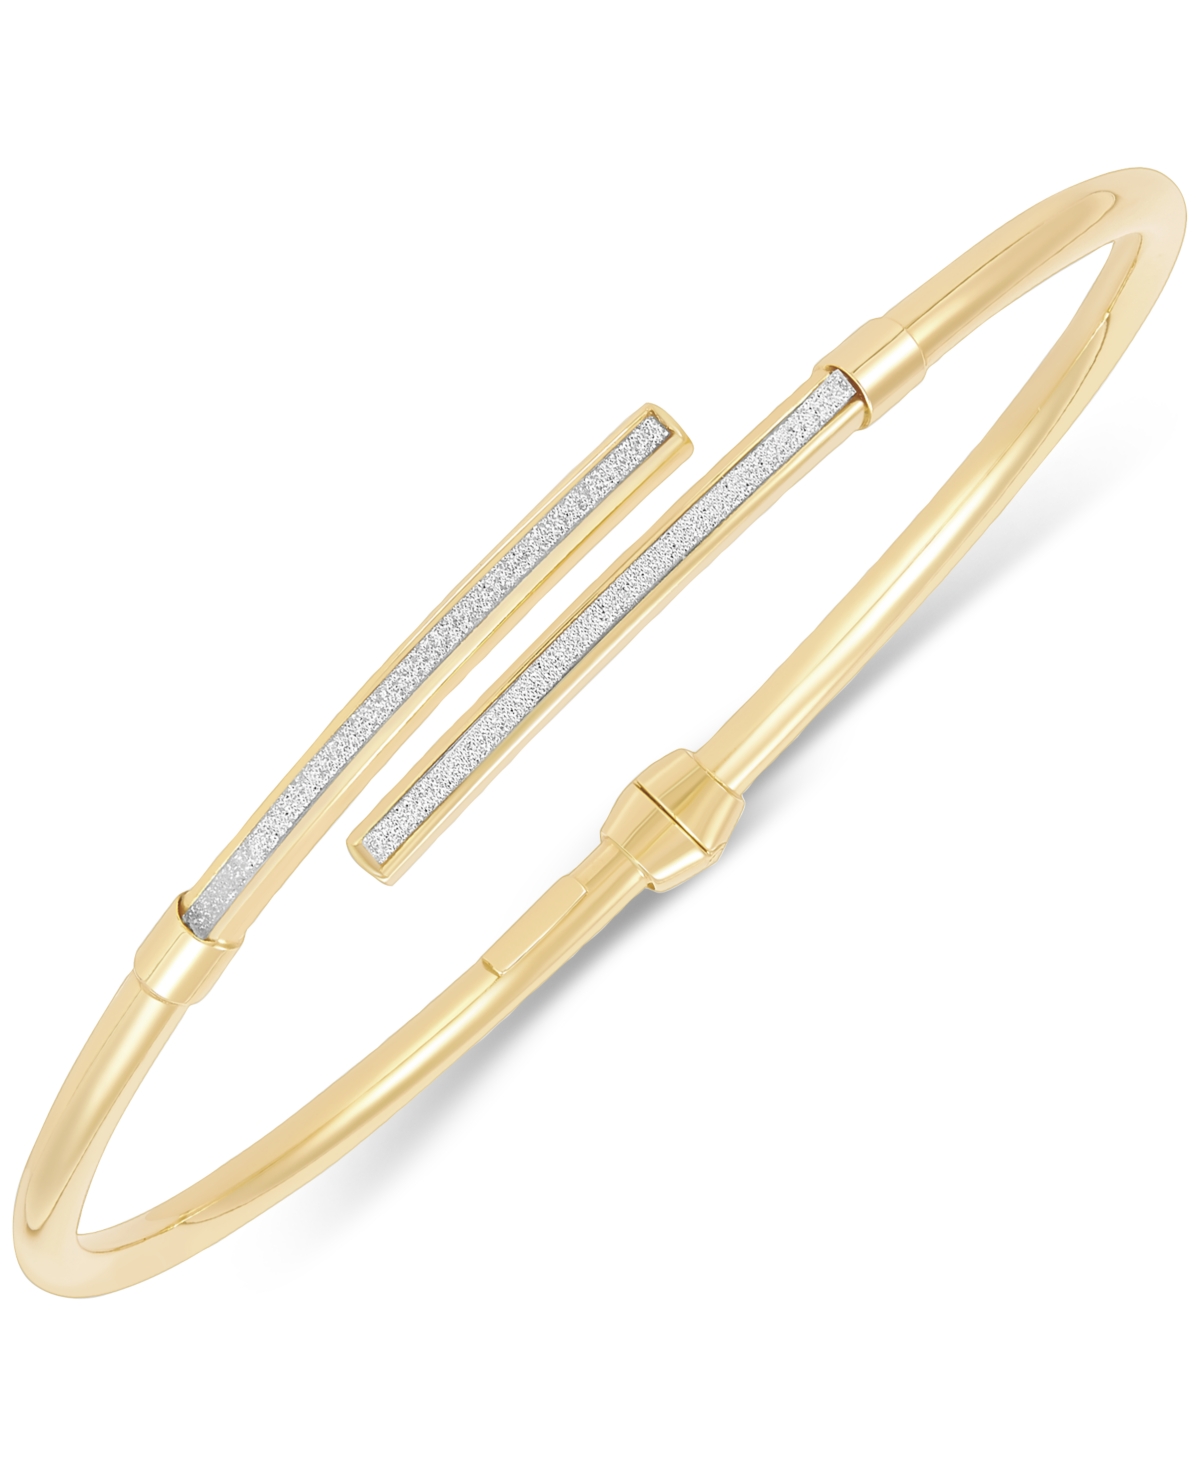 Glitter Polished Bypass Bangle Bracelet in 10k Gold - Gold